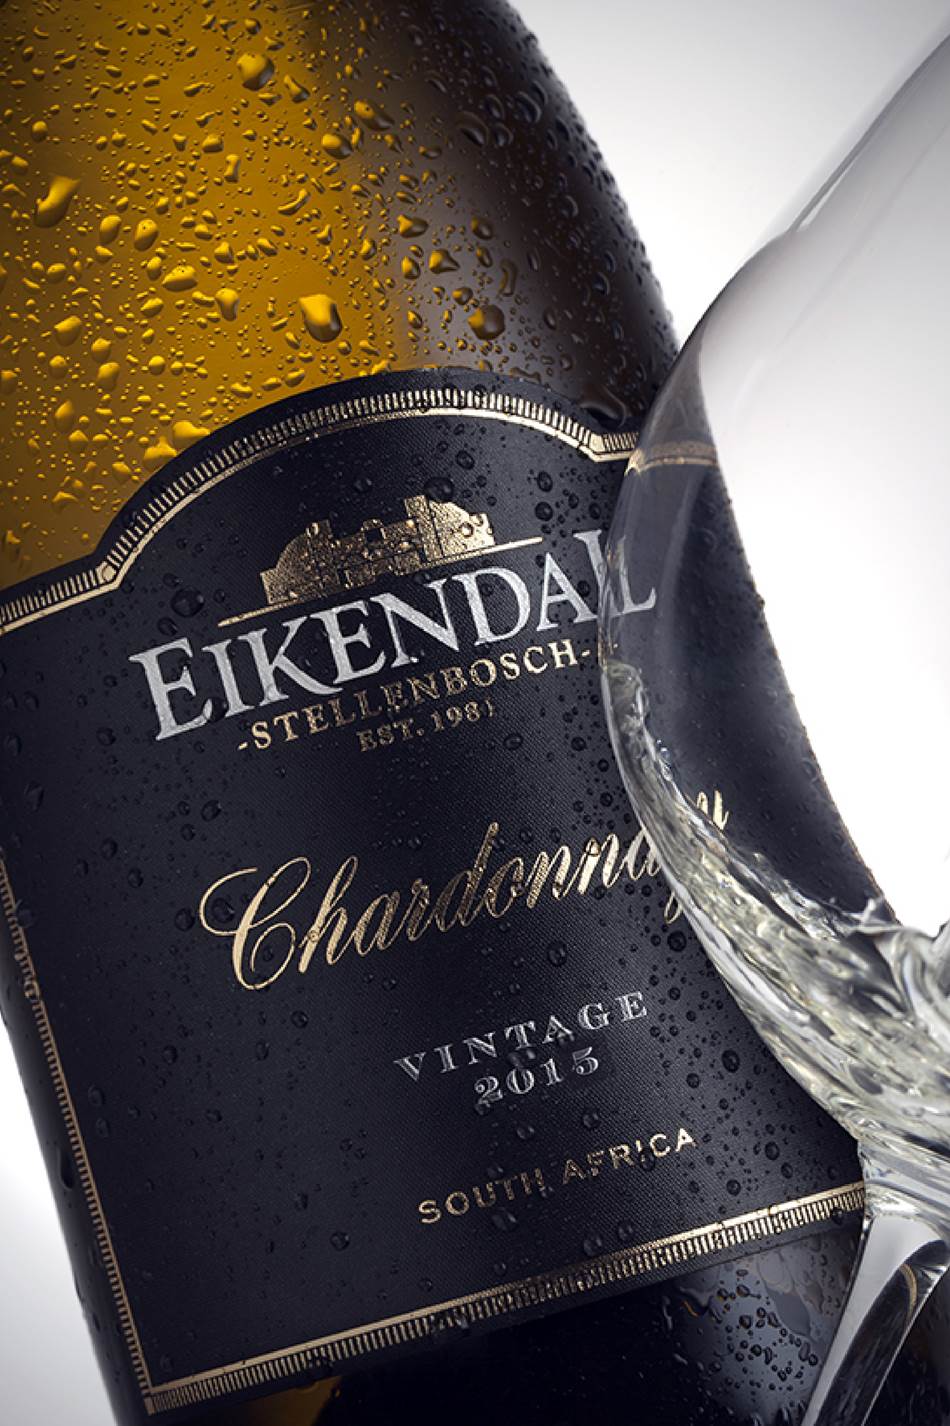 Eikendal Chardonnay 2015 styled